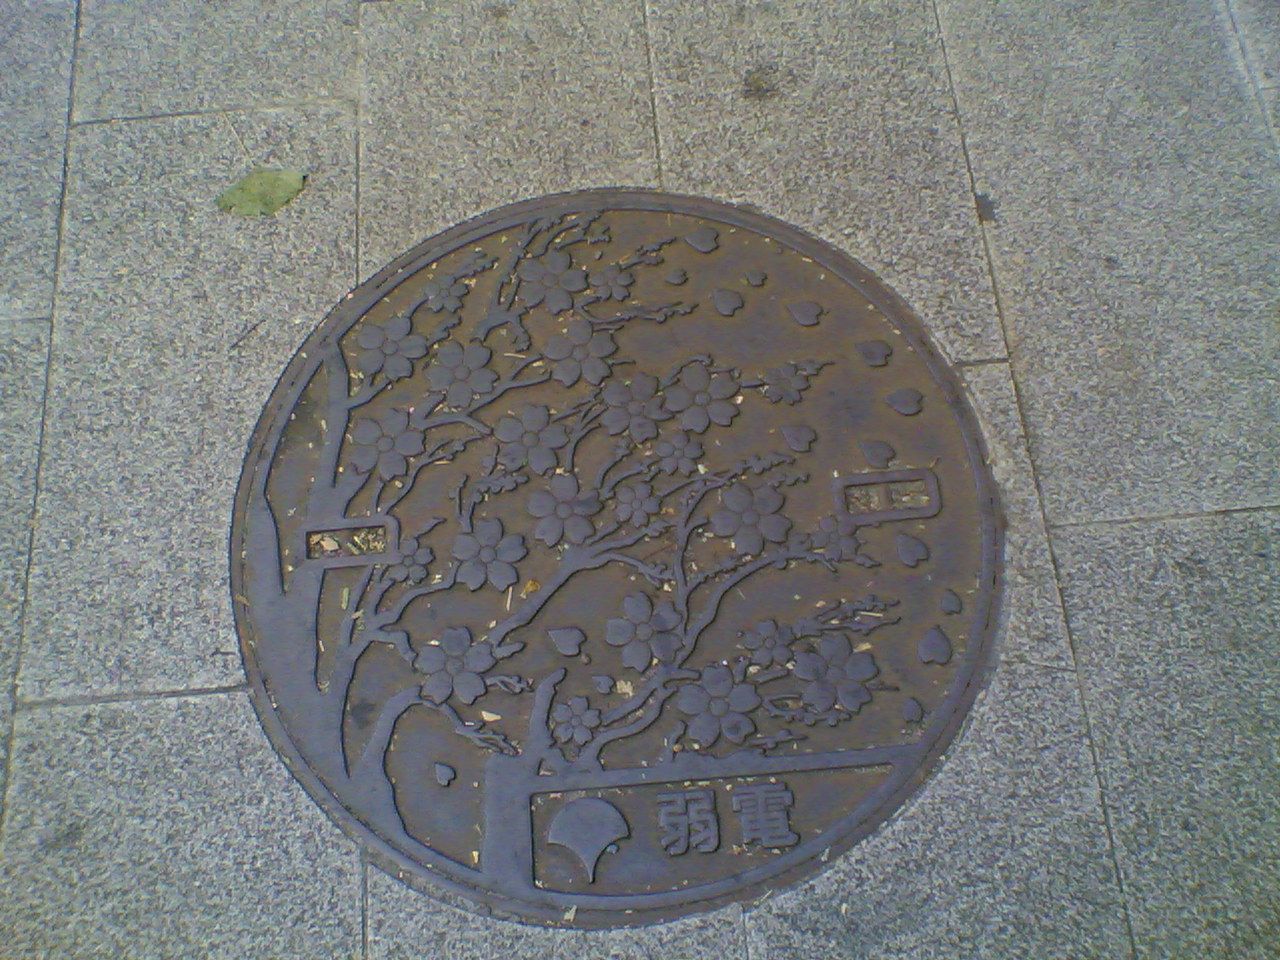 Manhole in Ueno Park, Tokyo